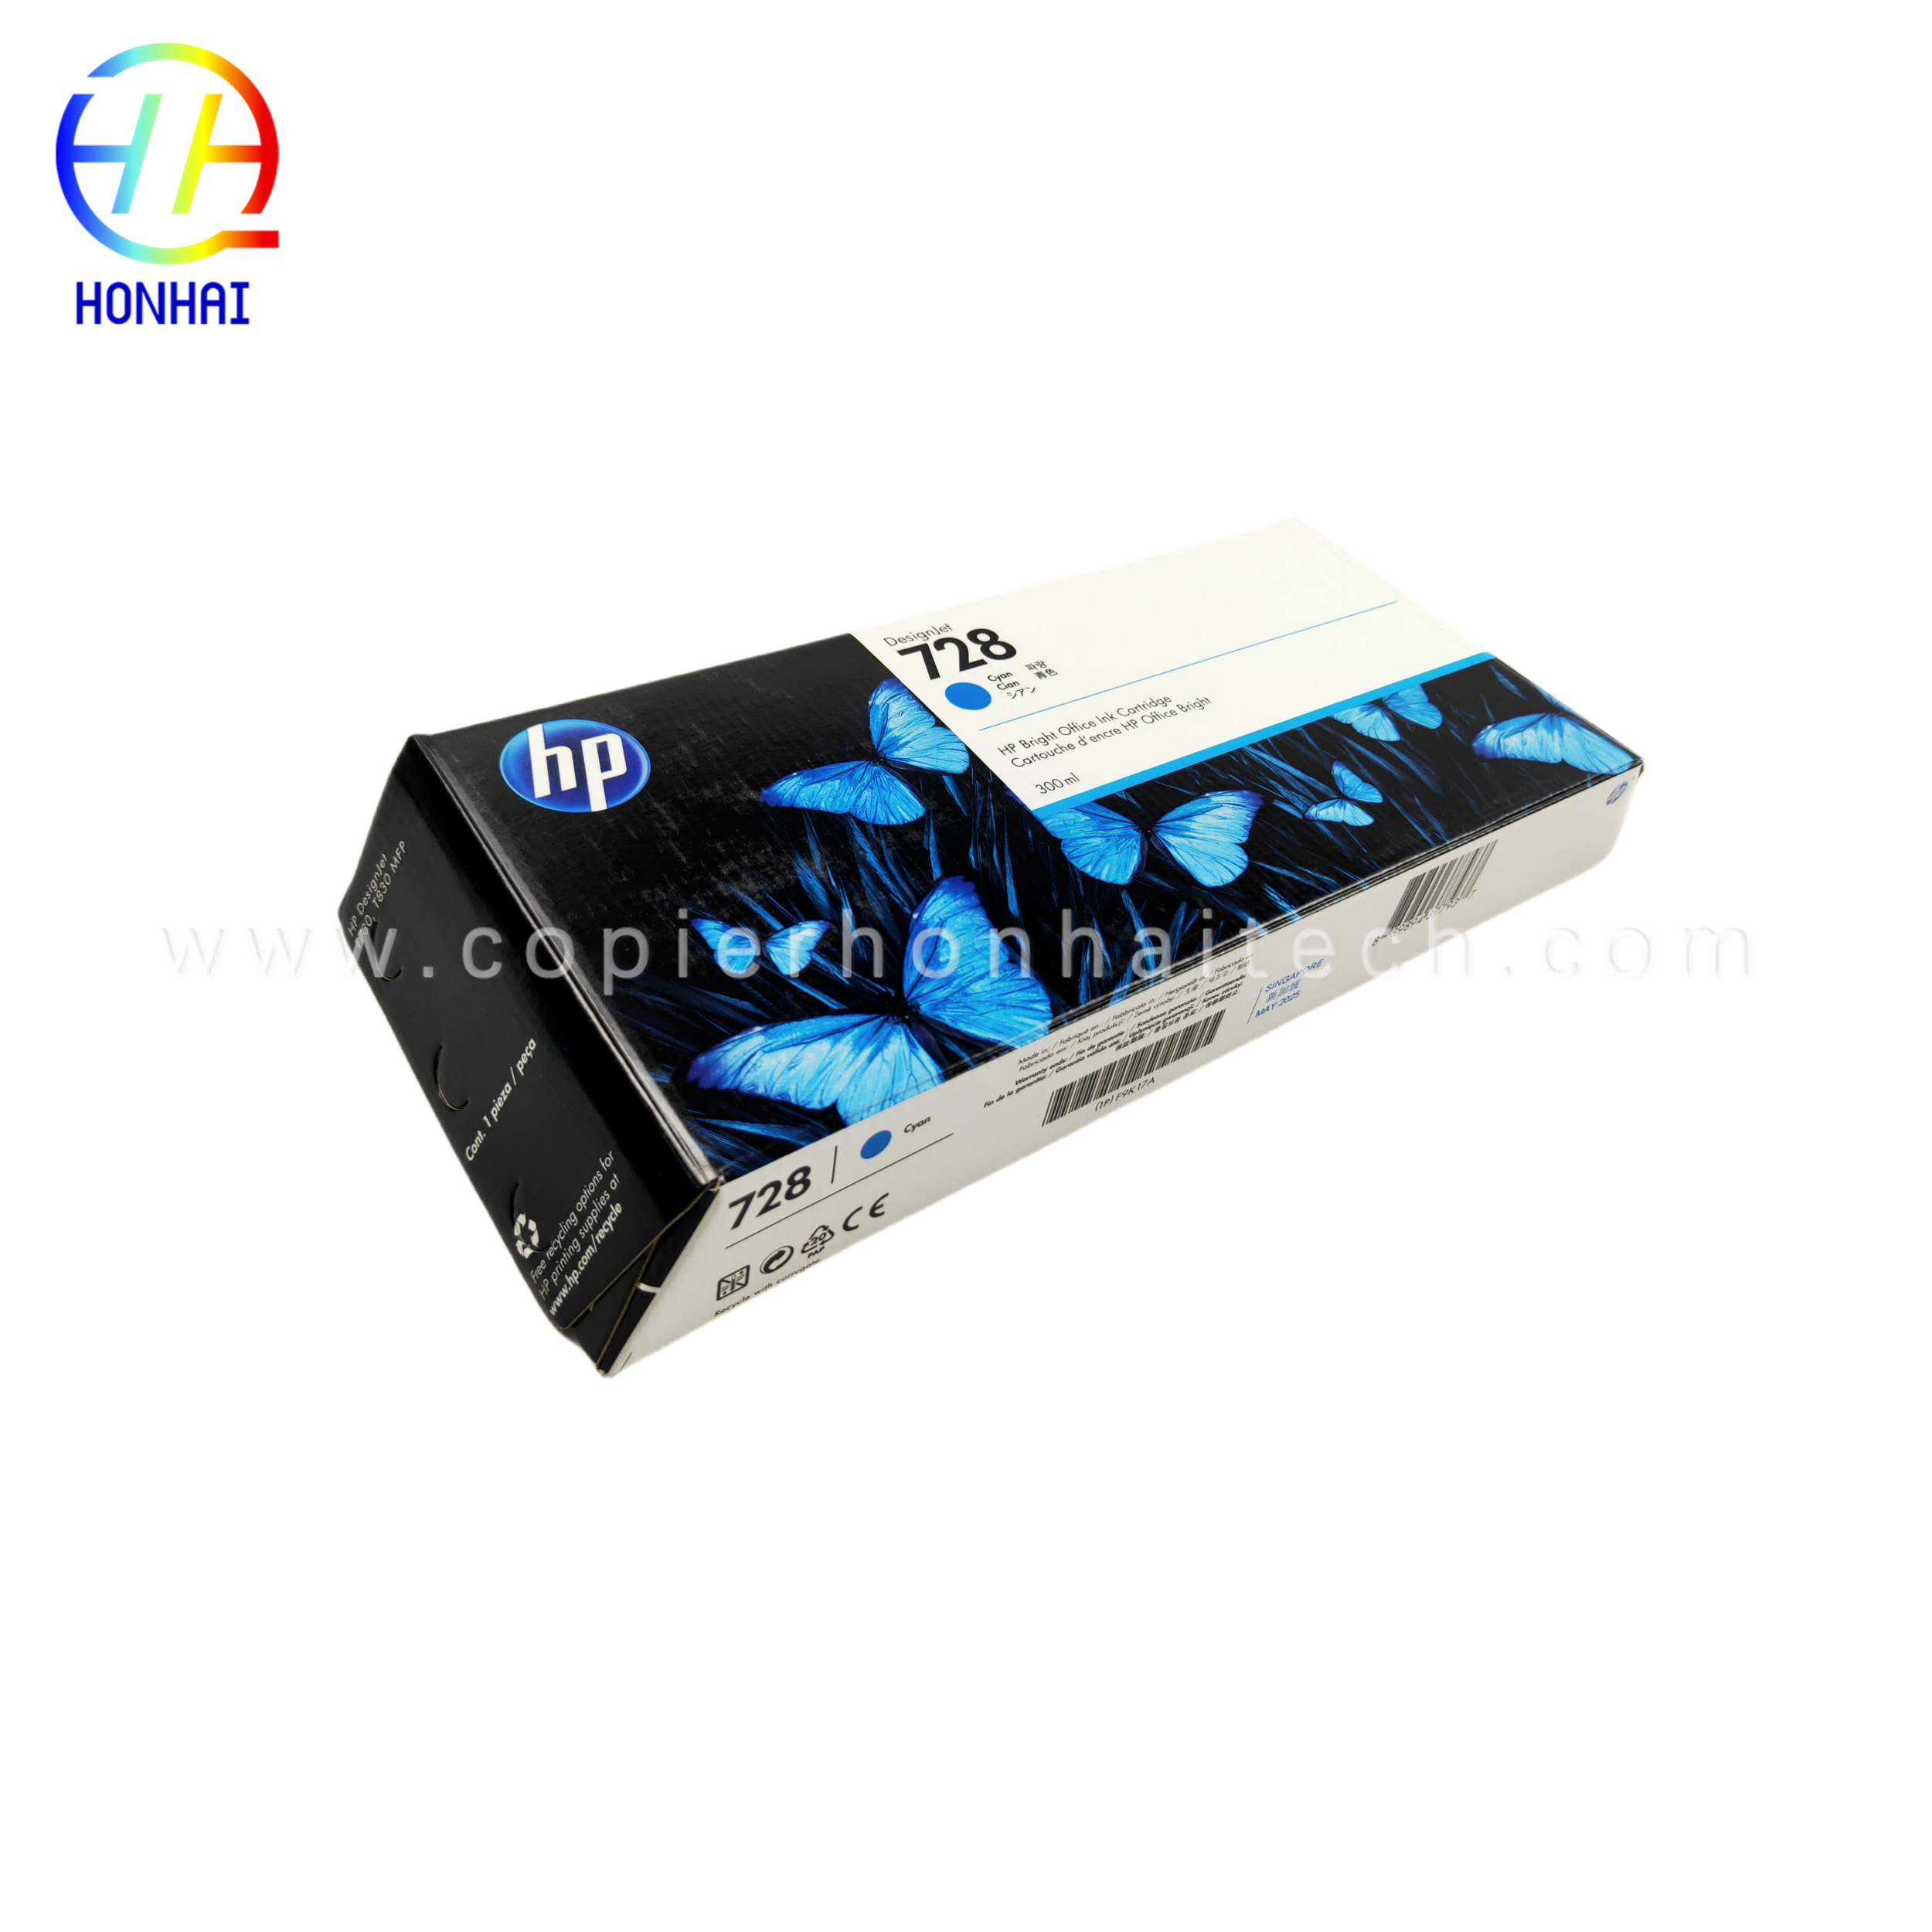 https://www.copierhonhaitech.com/original-new-ink-cartridge-cyan-for-hp-designjet-t730-and-t830-large-format-plotter-printers-and-hp-729-designjet-printhead- 728-f9k17a-produk/